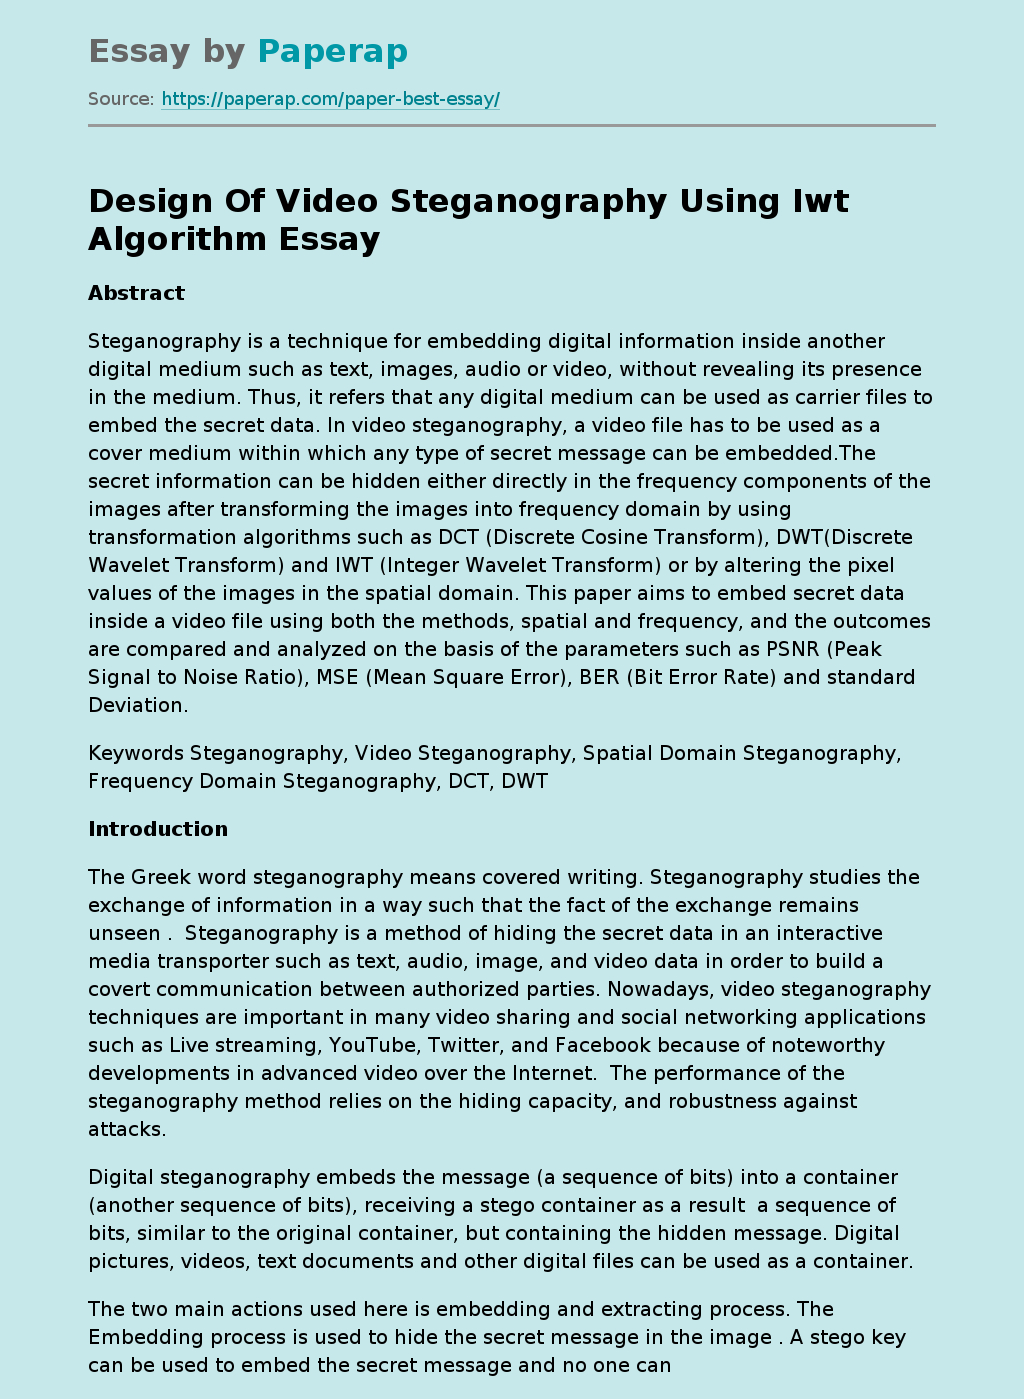 Design Of Video Steganography Using Iwt Algorithm